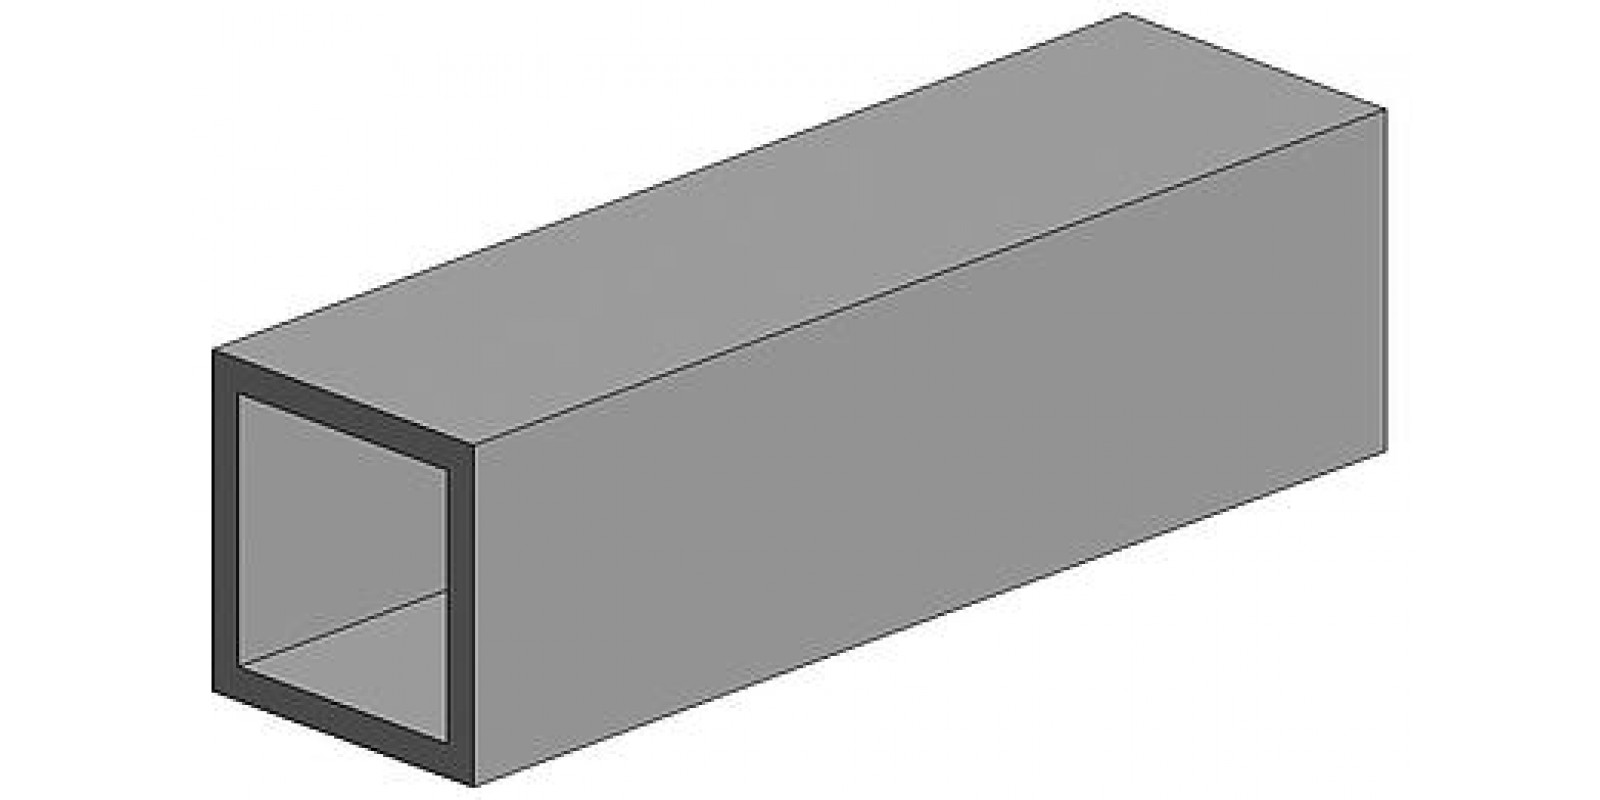 FA500252  White polystyrene square tube, 3.20 mm edge length